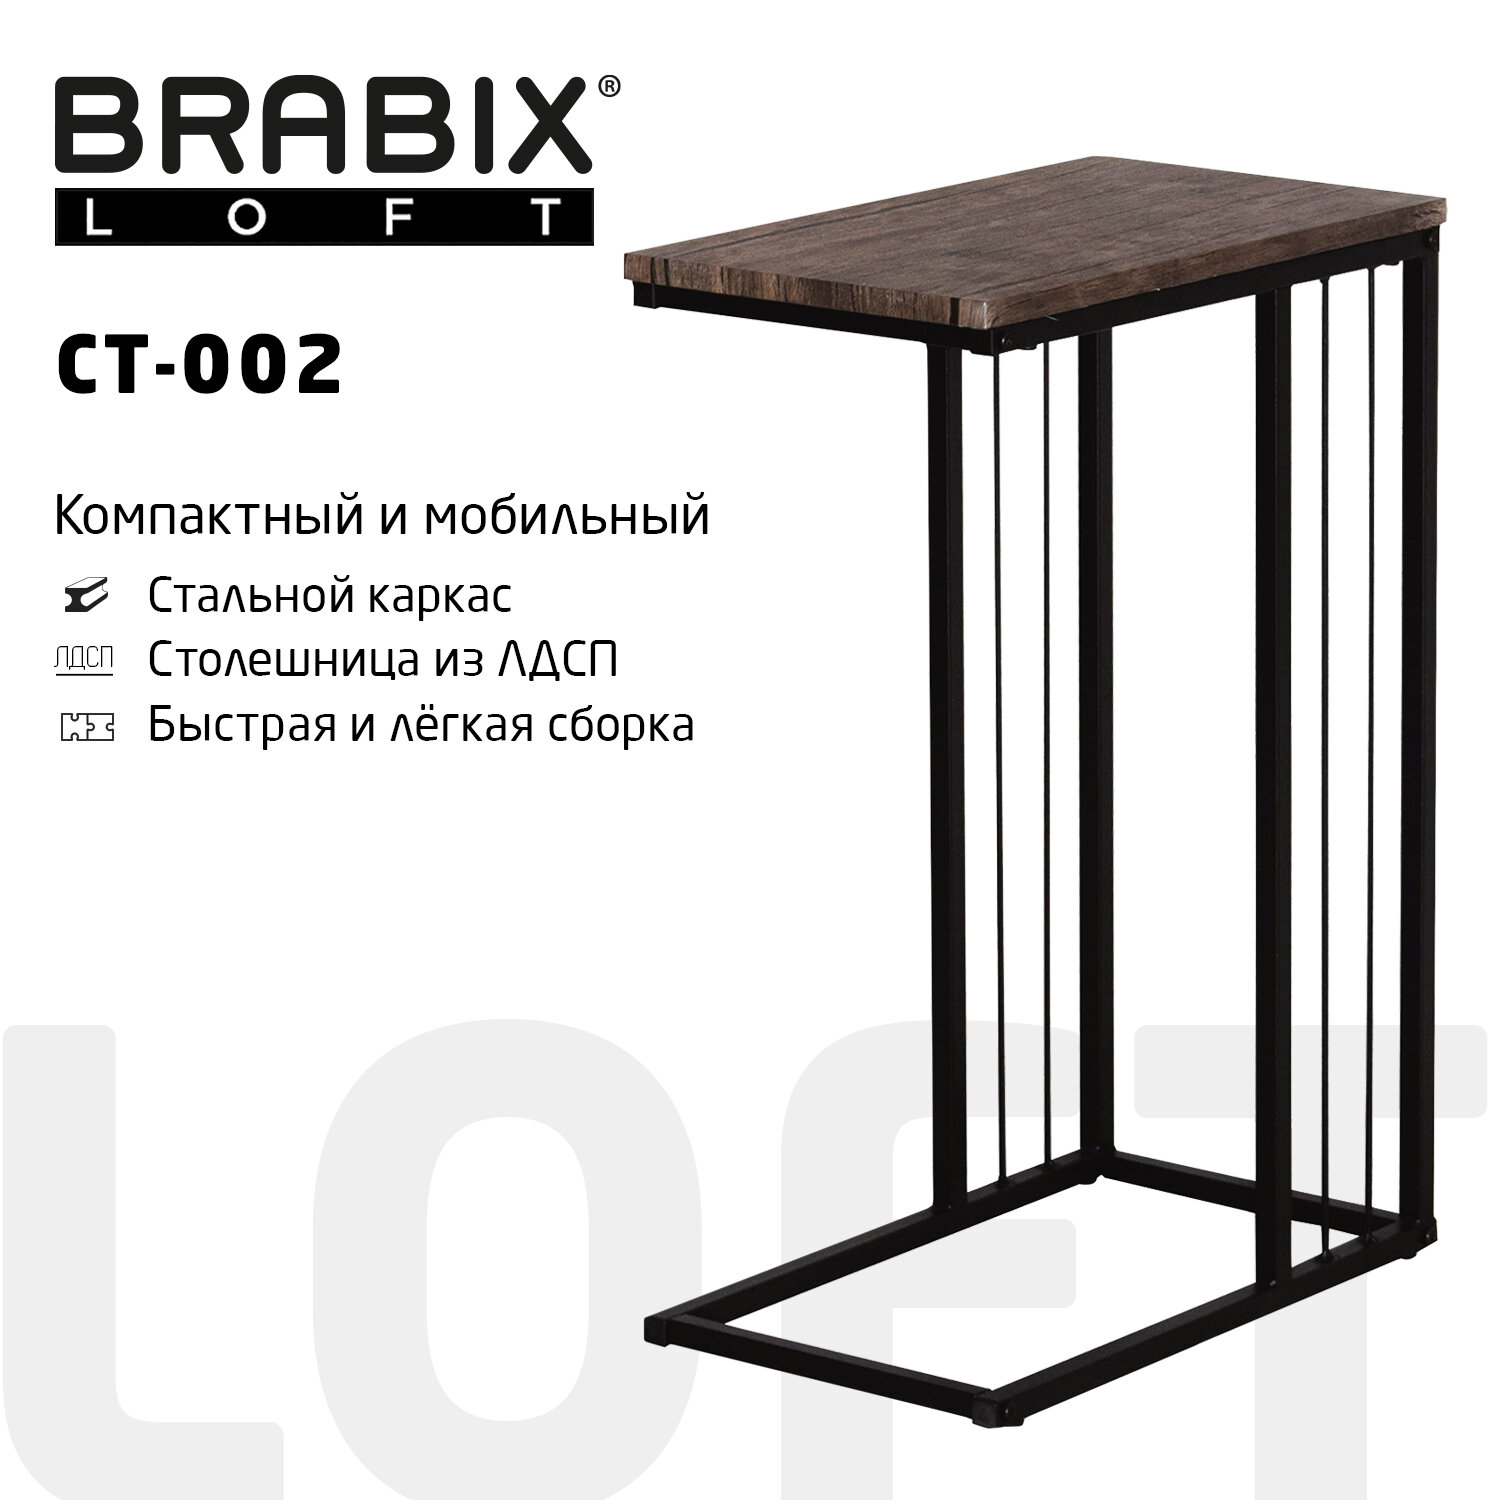 Brabix  BRABIX LOFT CT-002 641861